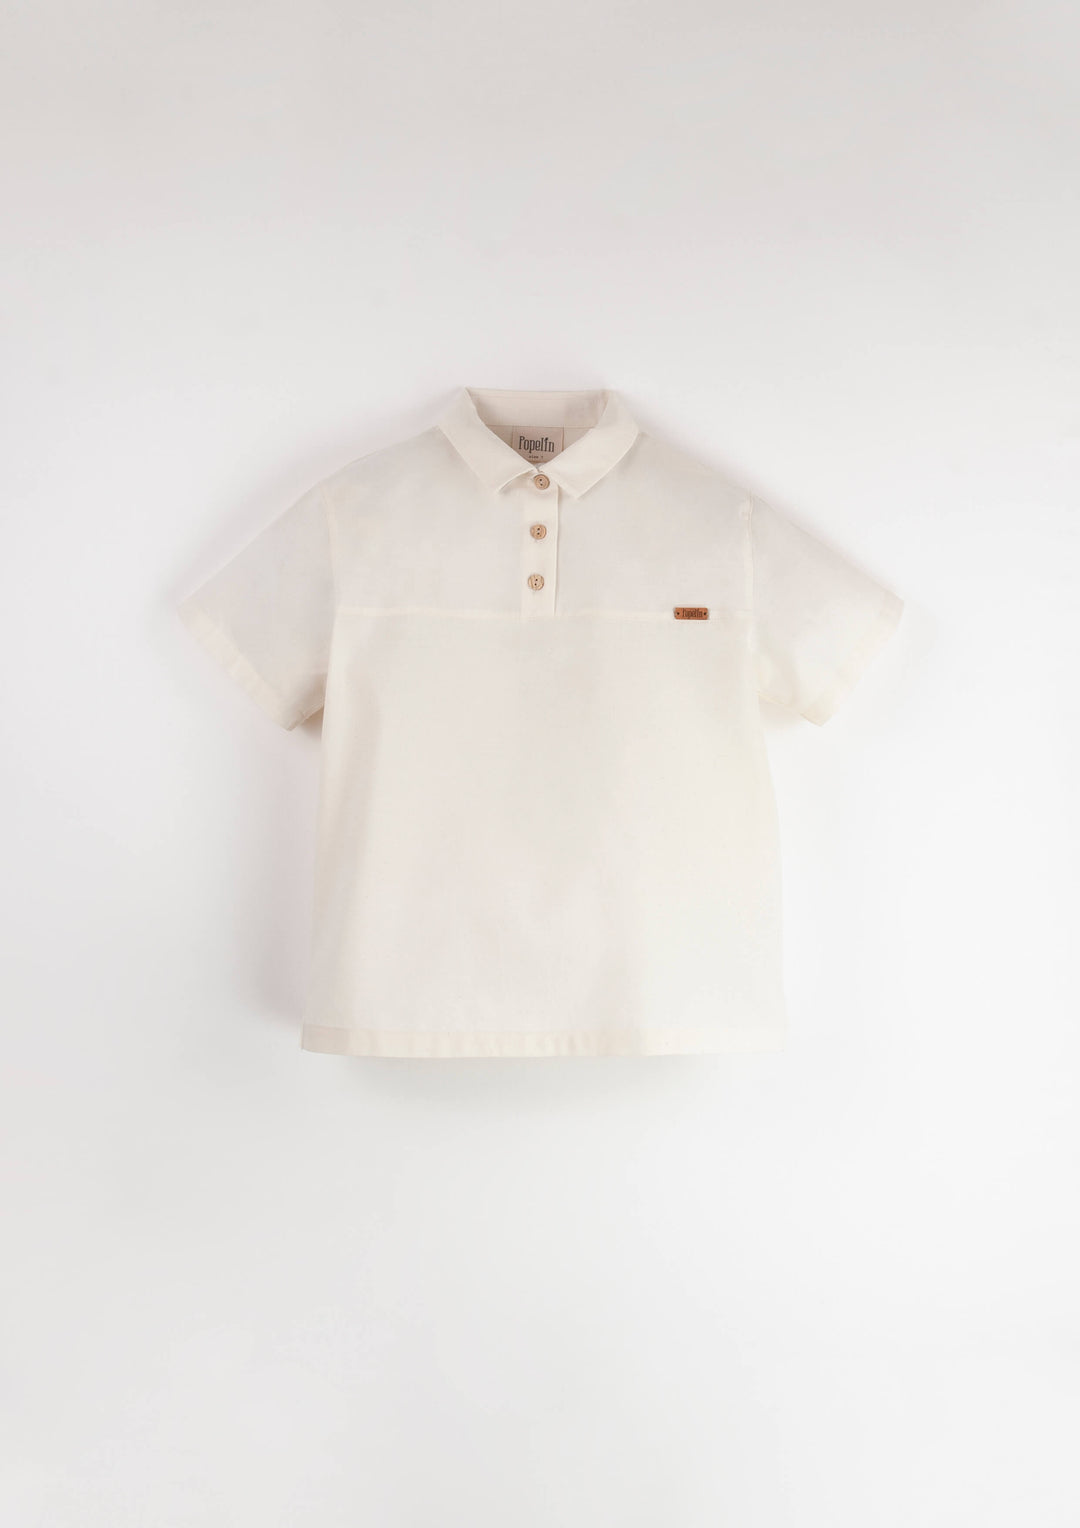 Mod.25.1 Off-white shirt